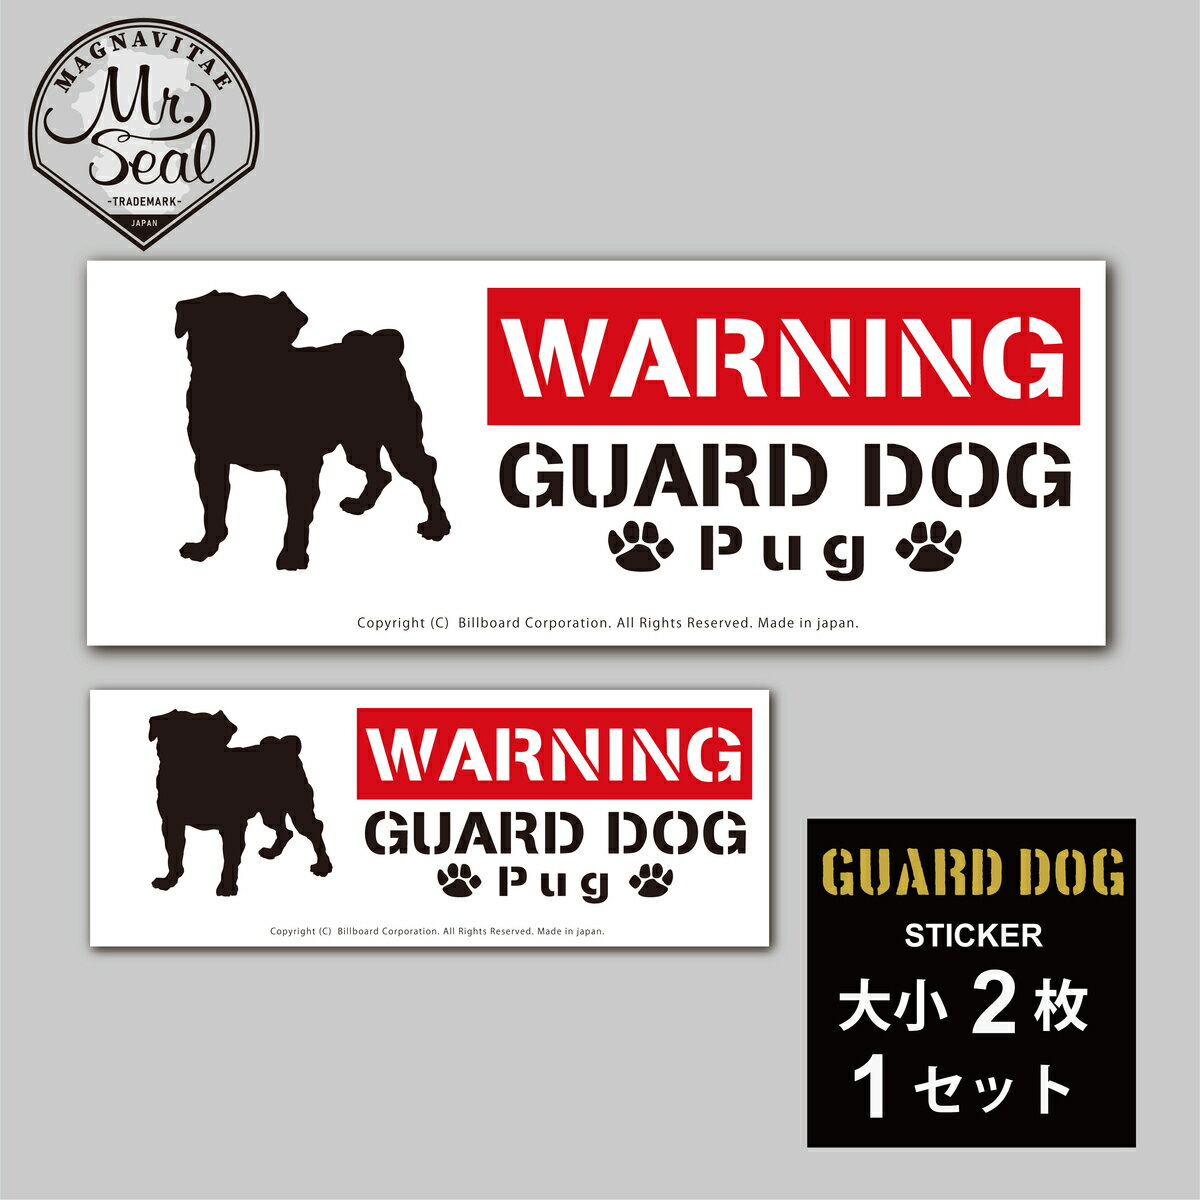 GUARD DOG Sticker [Pug]番犬ステッカー/パグ 1